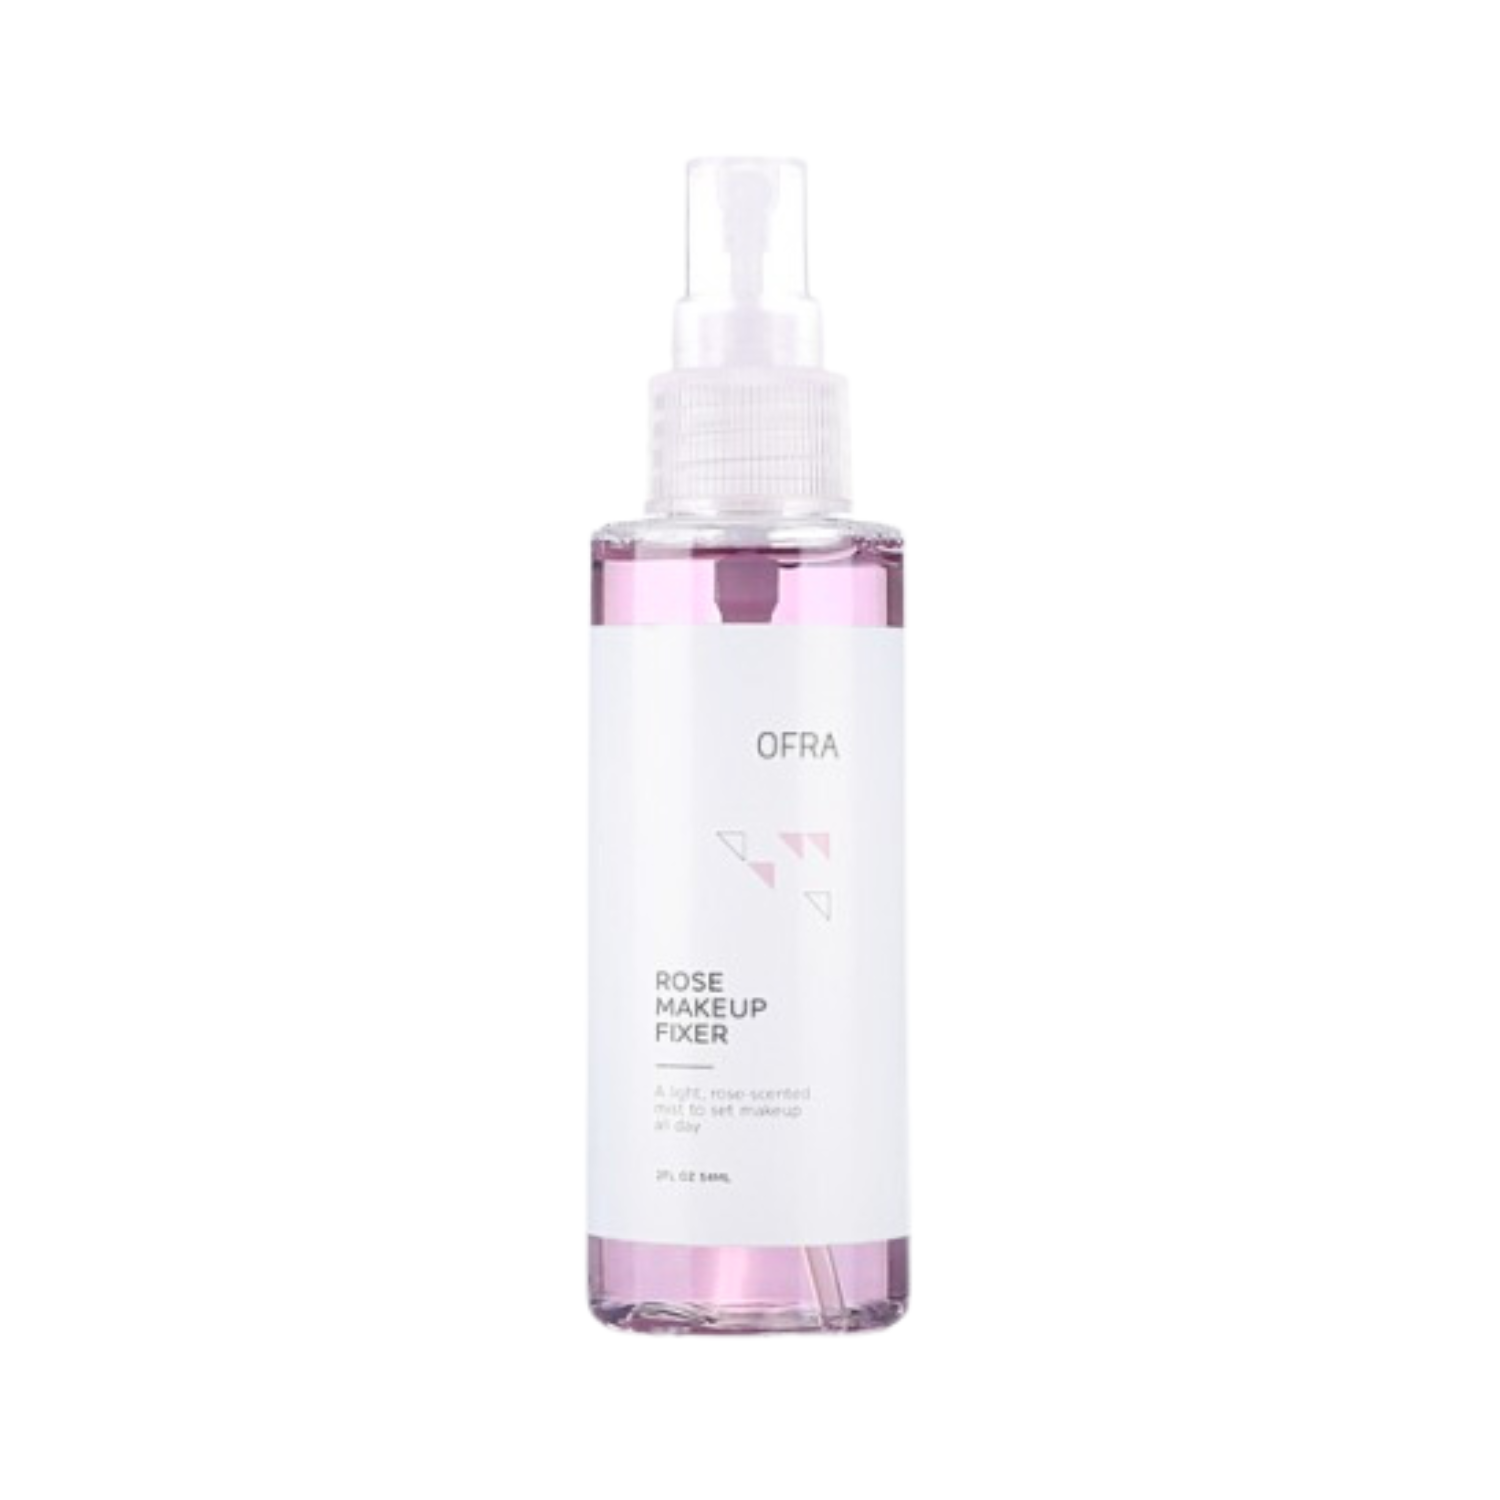 ofra-rose-makeup-fixer-setting-spray-54ml